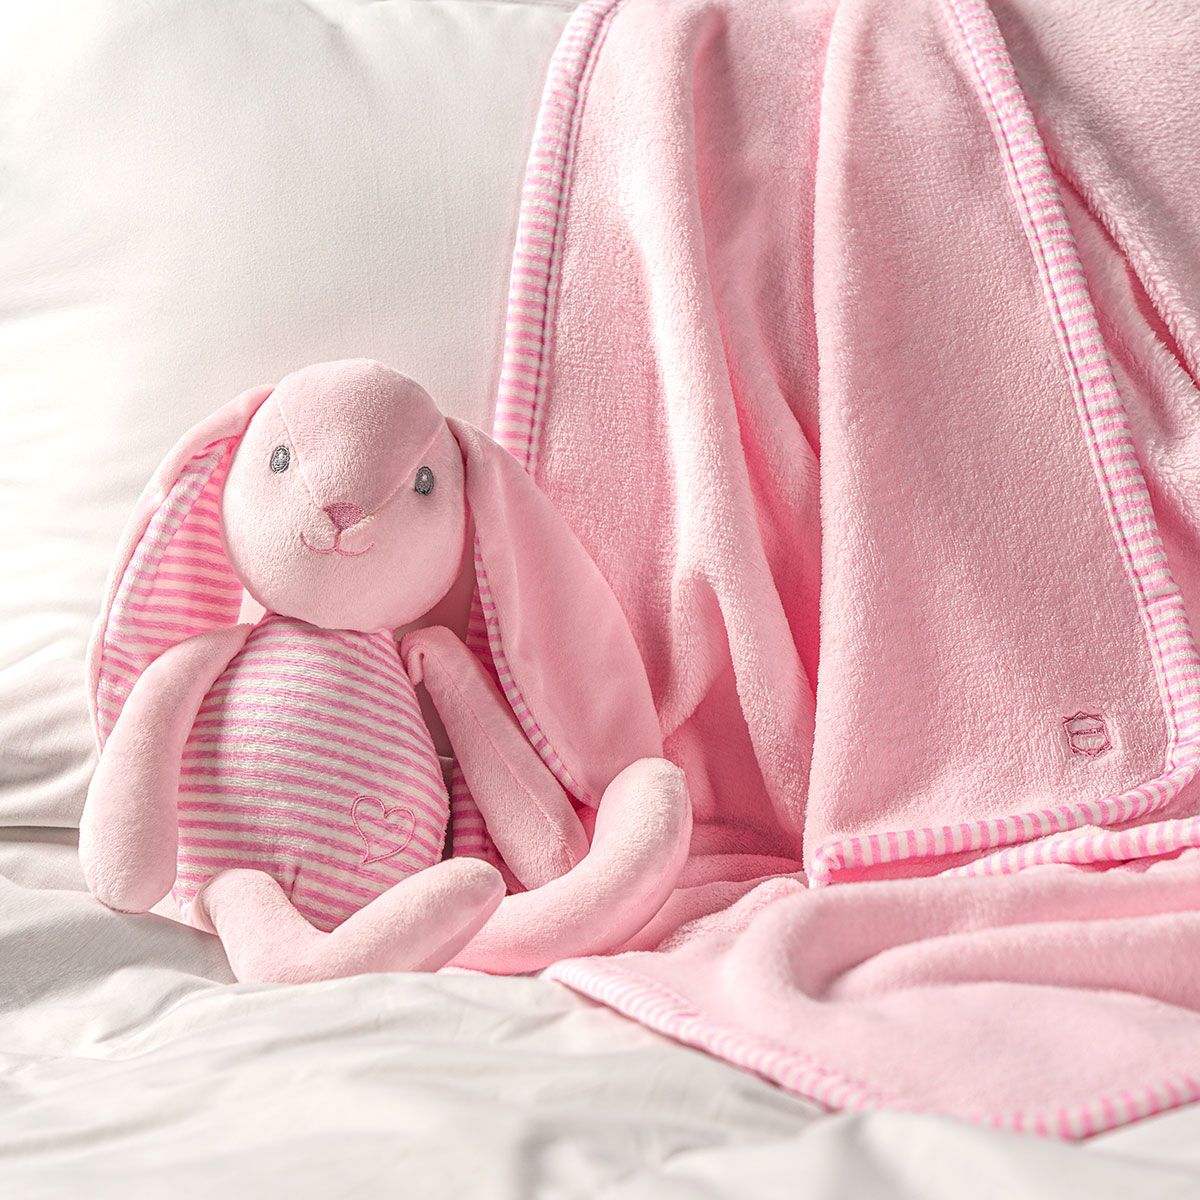 плед с игрушкой togas зайка розовый с белым 90х75 см Плед с игрушкой Togas Зайка розовый с белым 90х75 см